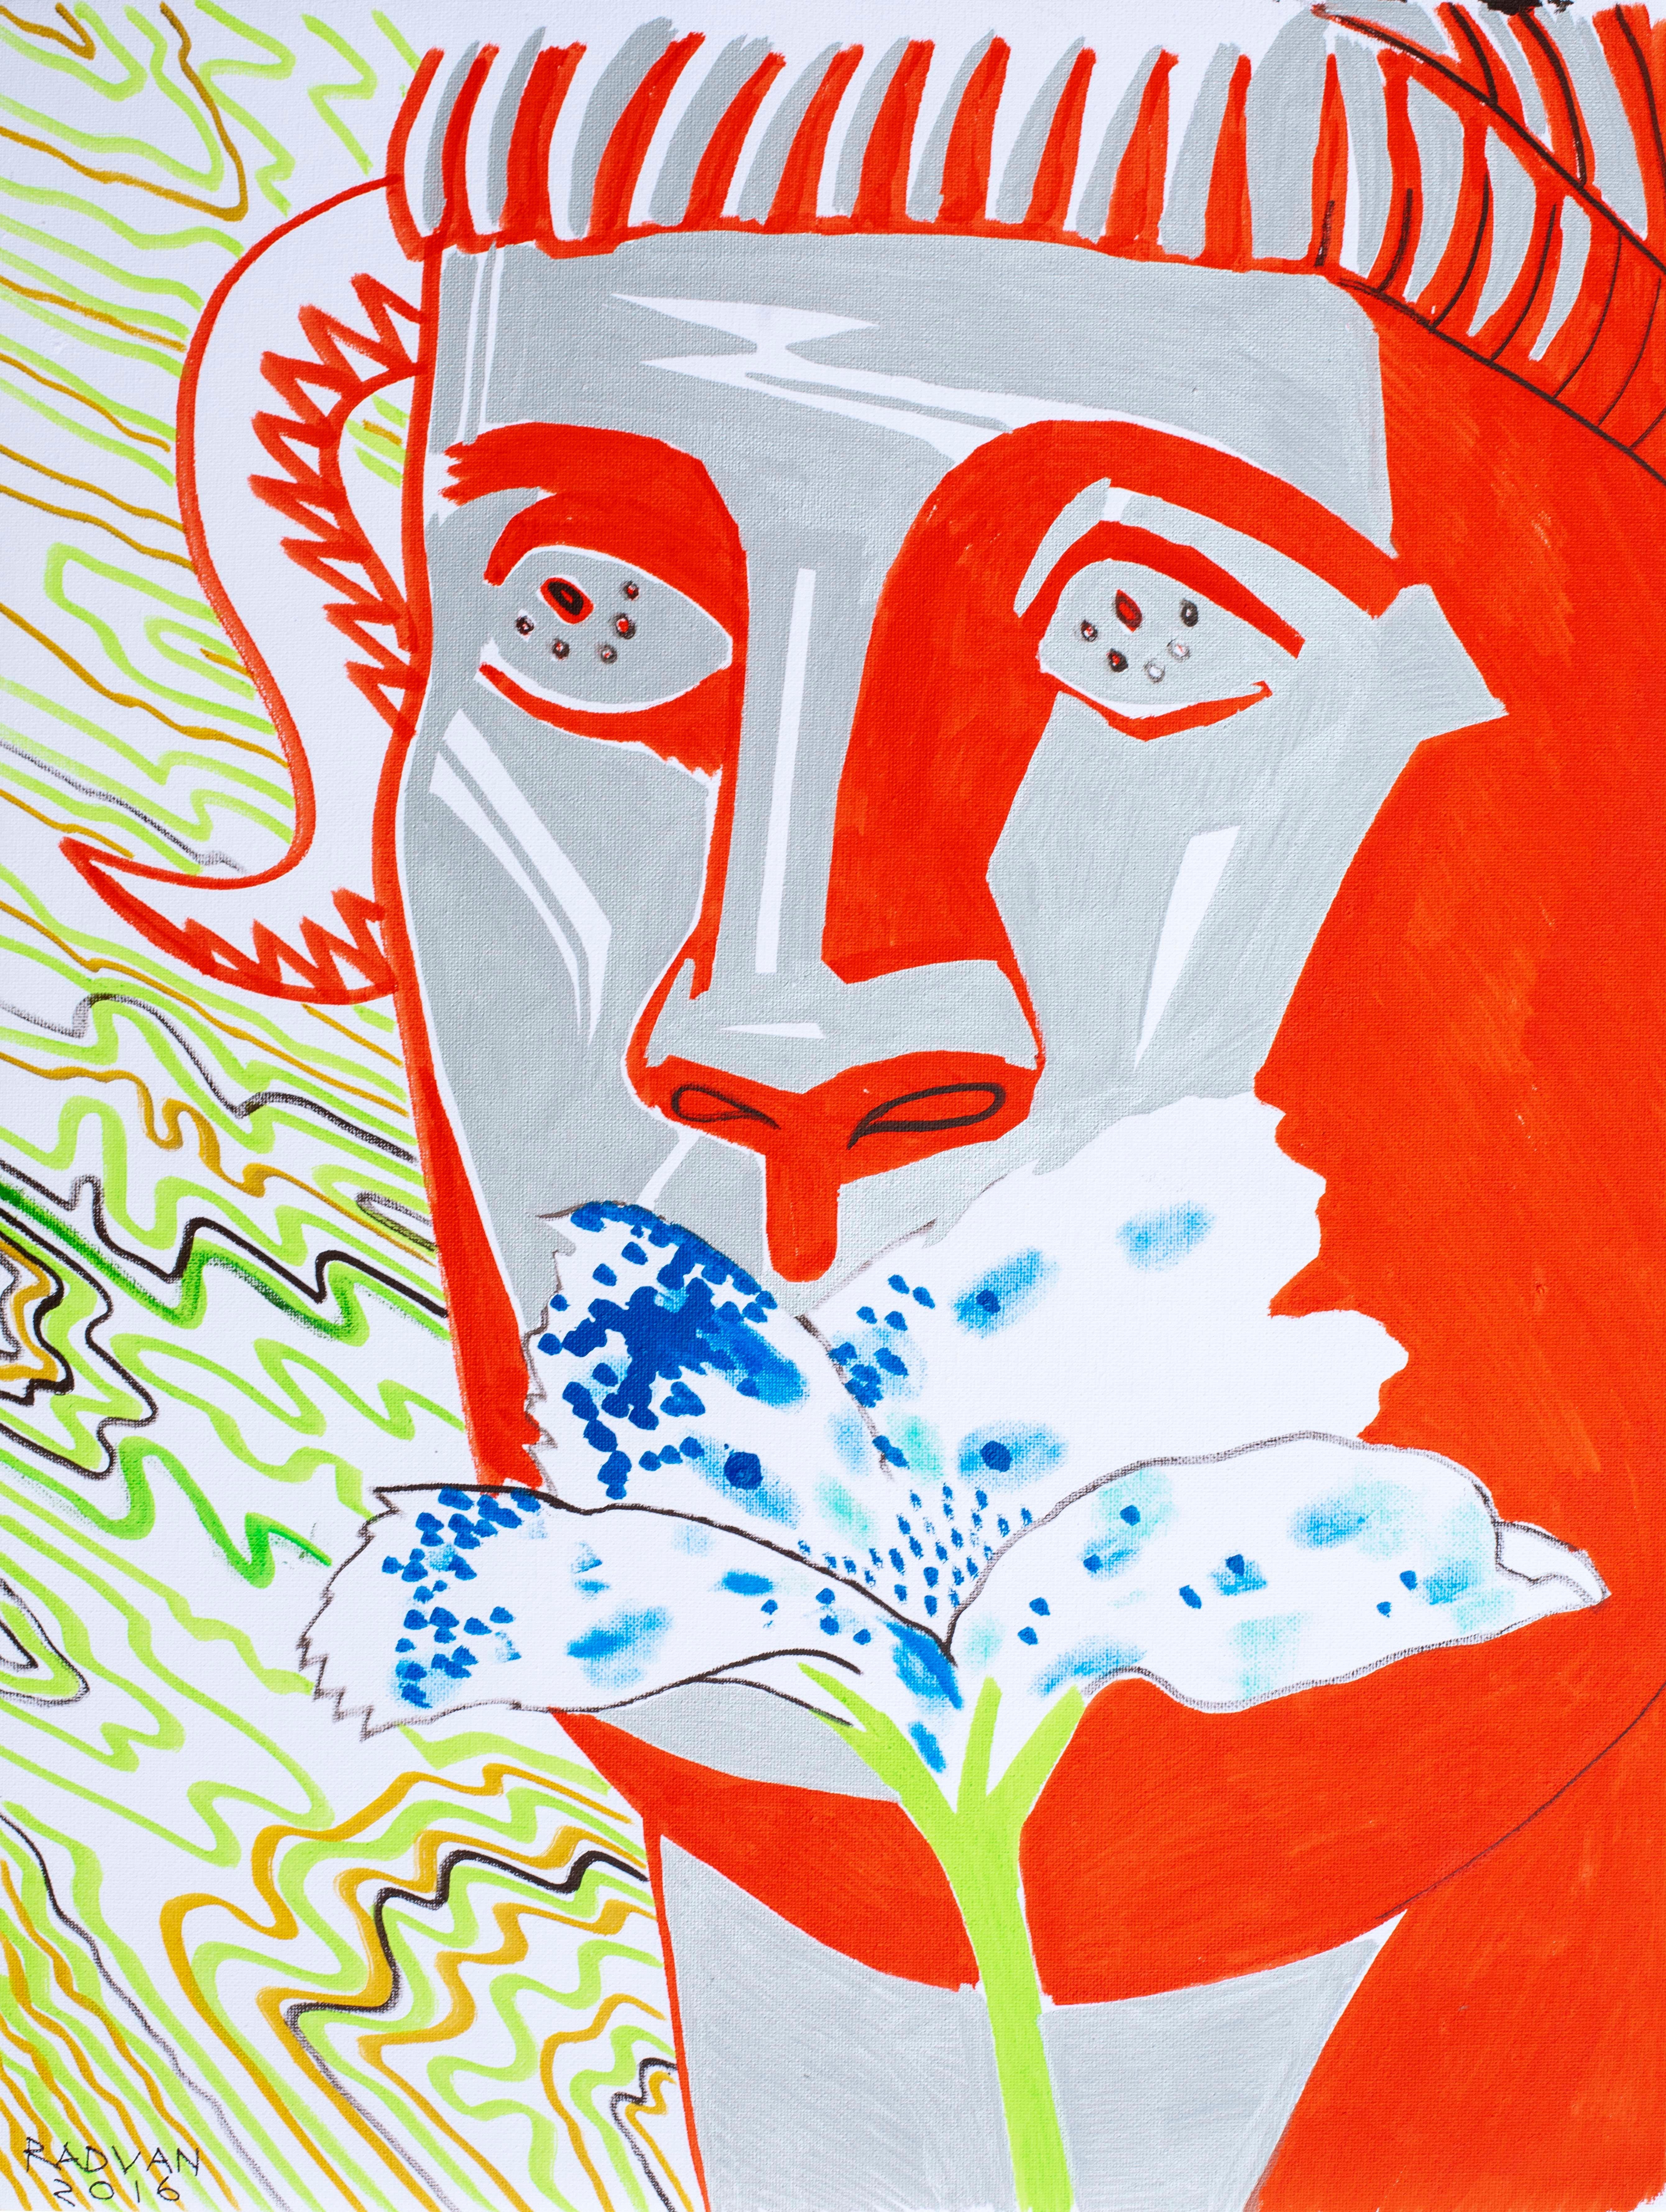 Alexandru Rădvan Figurative Painting – Mythologische Mythologie II (Faun) – 21. Jahrhundert, Rot, Blau, Blume, Mythologie, Zeitgenössische Kunst